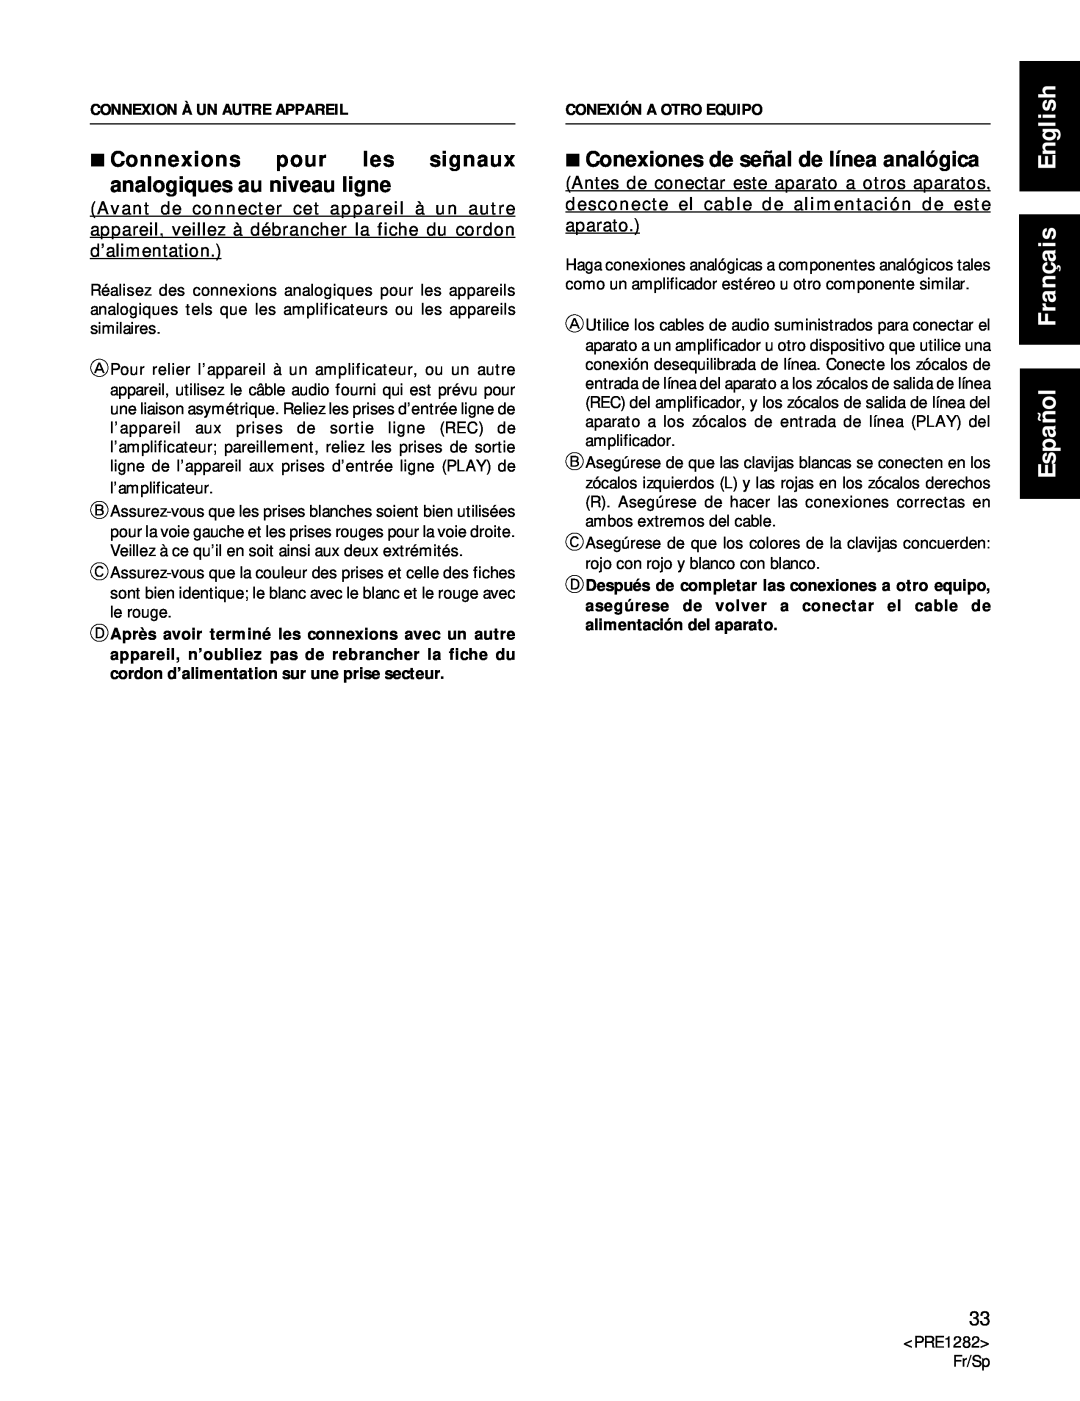 Americana Appliances CDR-850 manual 7Conexiones de señal de línea analógica, Español Français English 